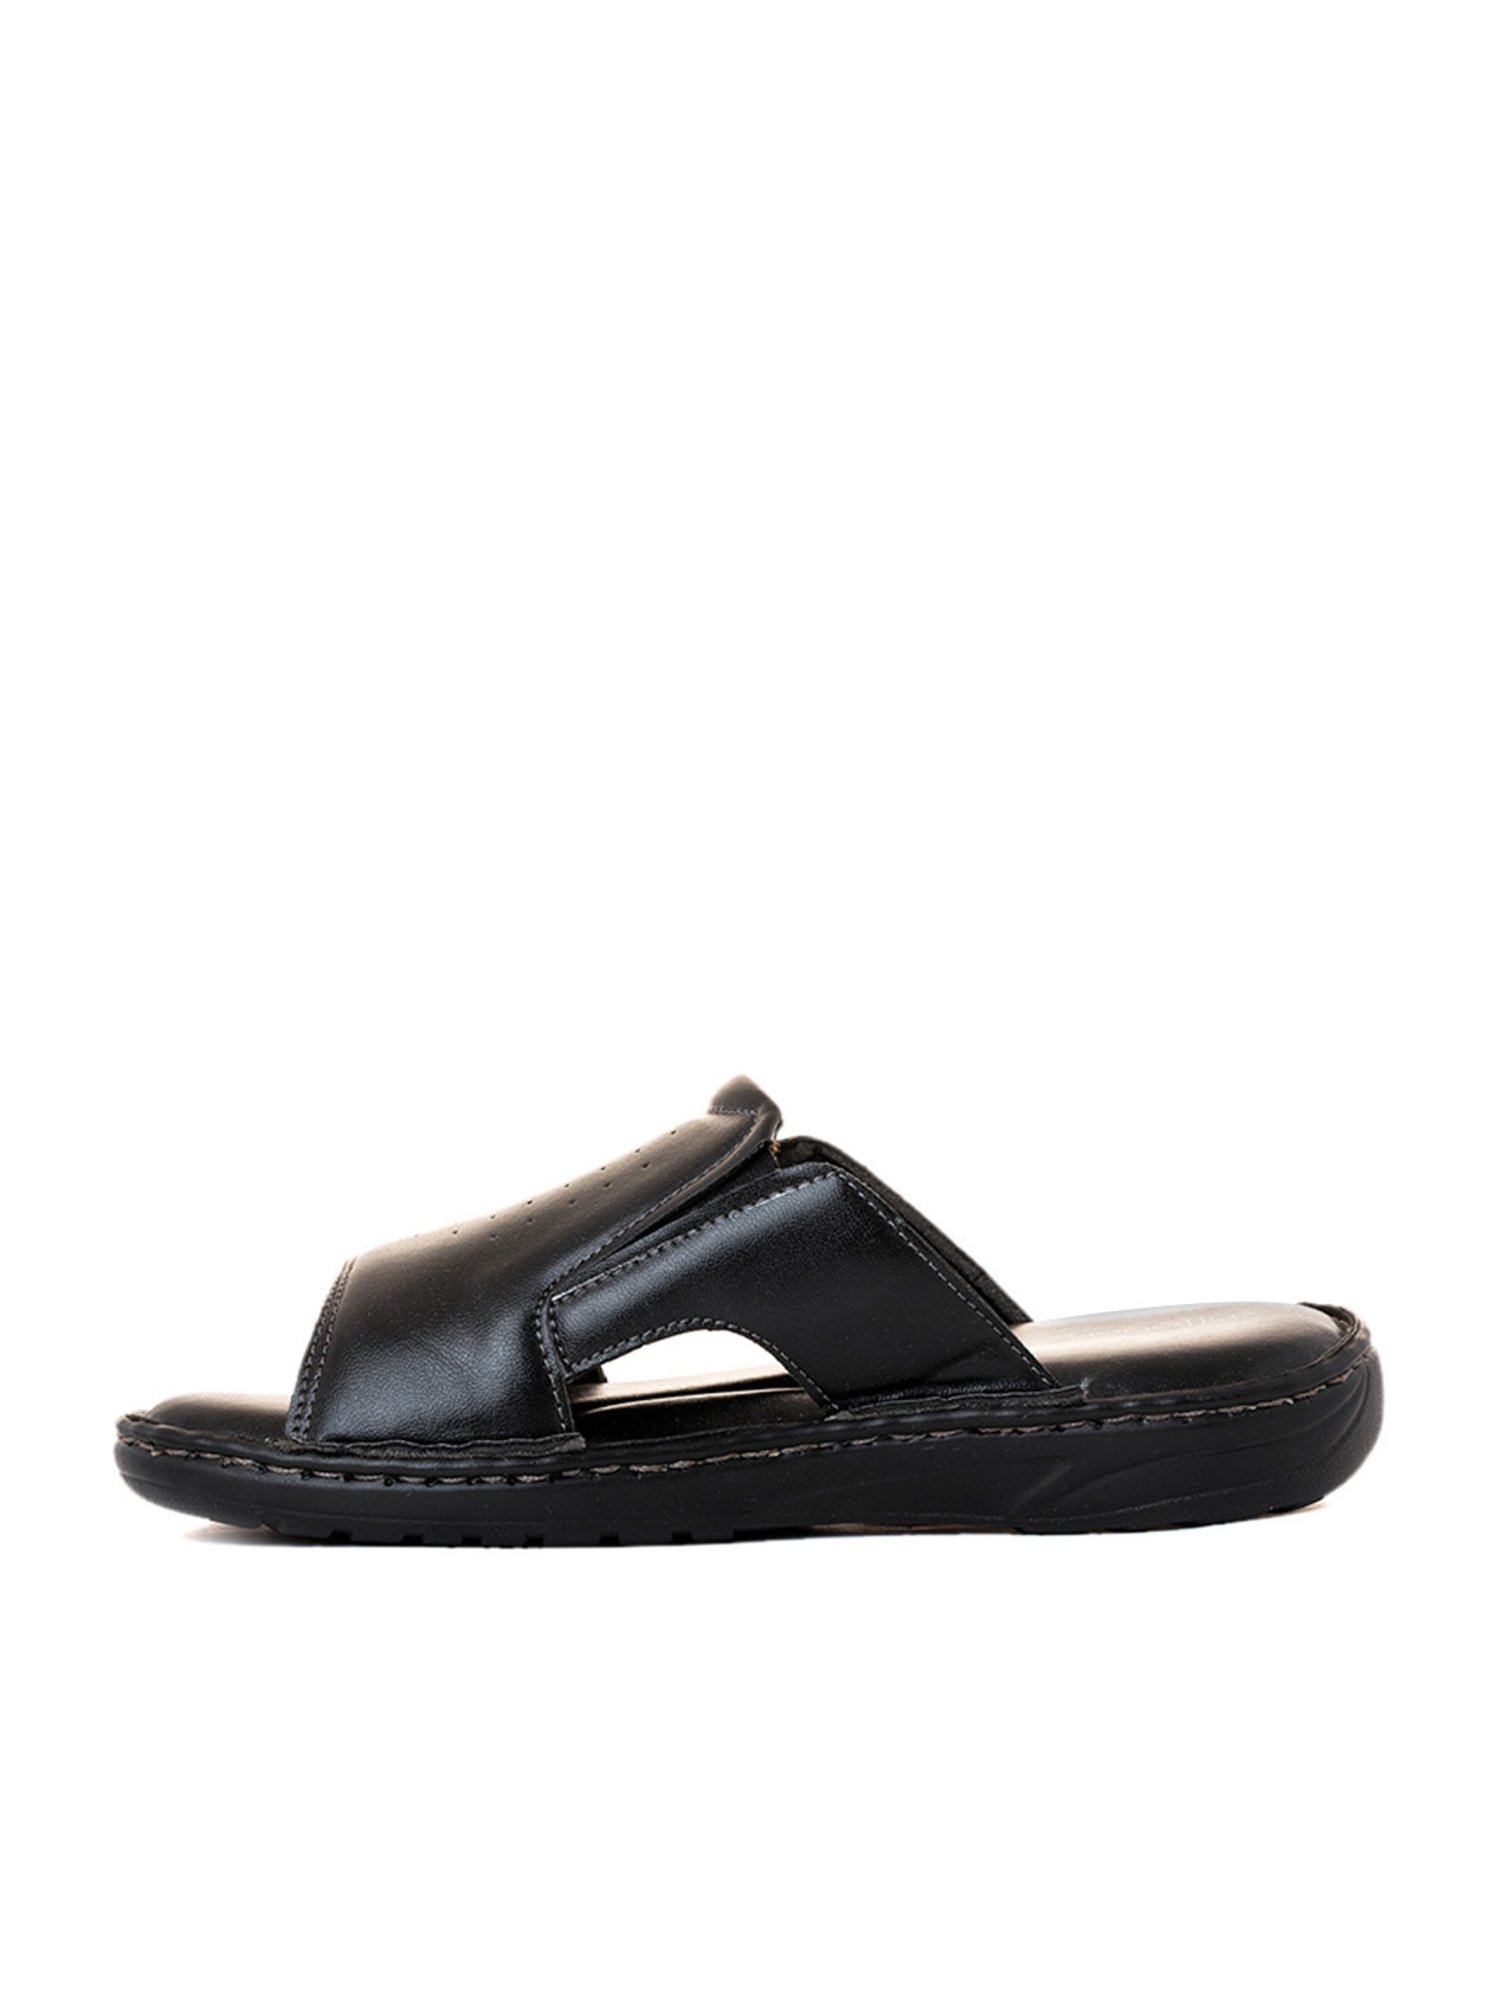 KHADIM - Navy Men's Sandals - Buy KHADIM - Navy Men's Sandals Online at  Best Prices in India on Snapdeal